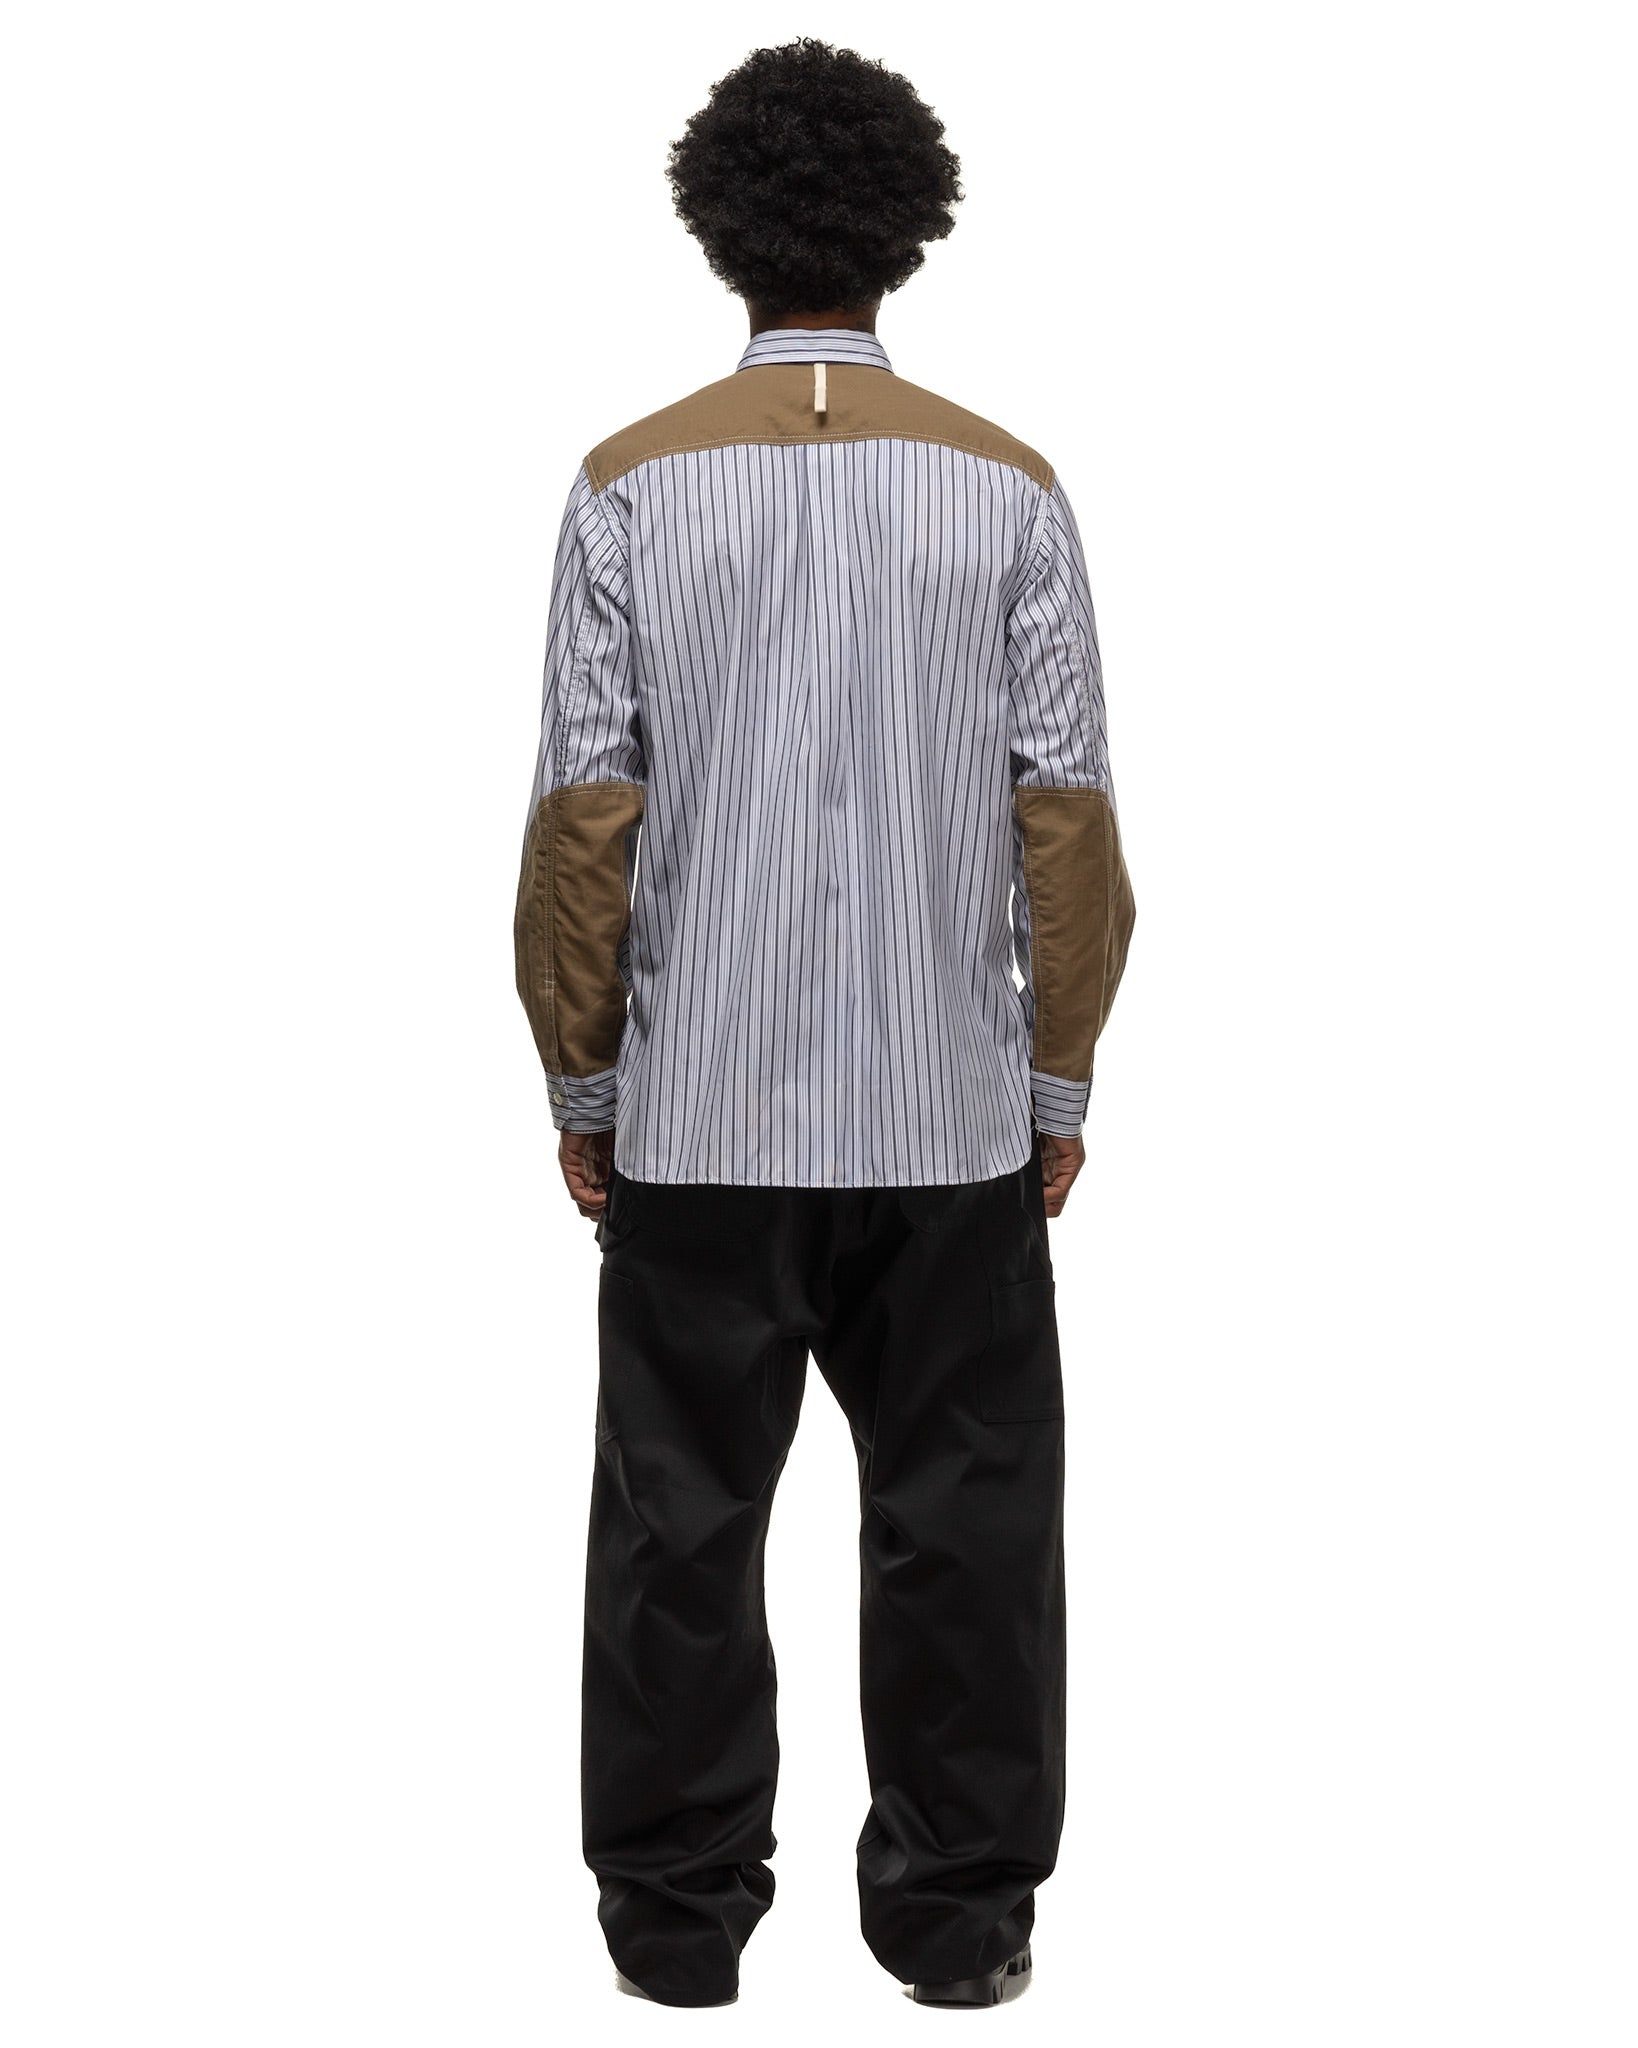 Men's Cotton Stripe Shirt White/Navy - 3